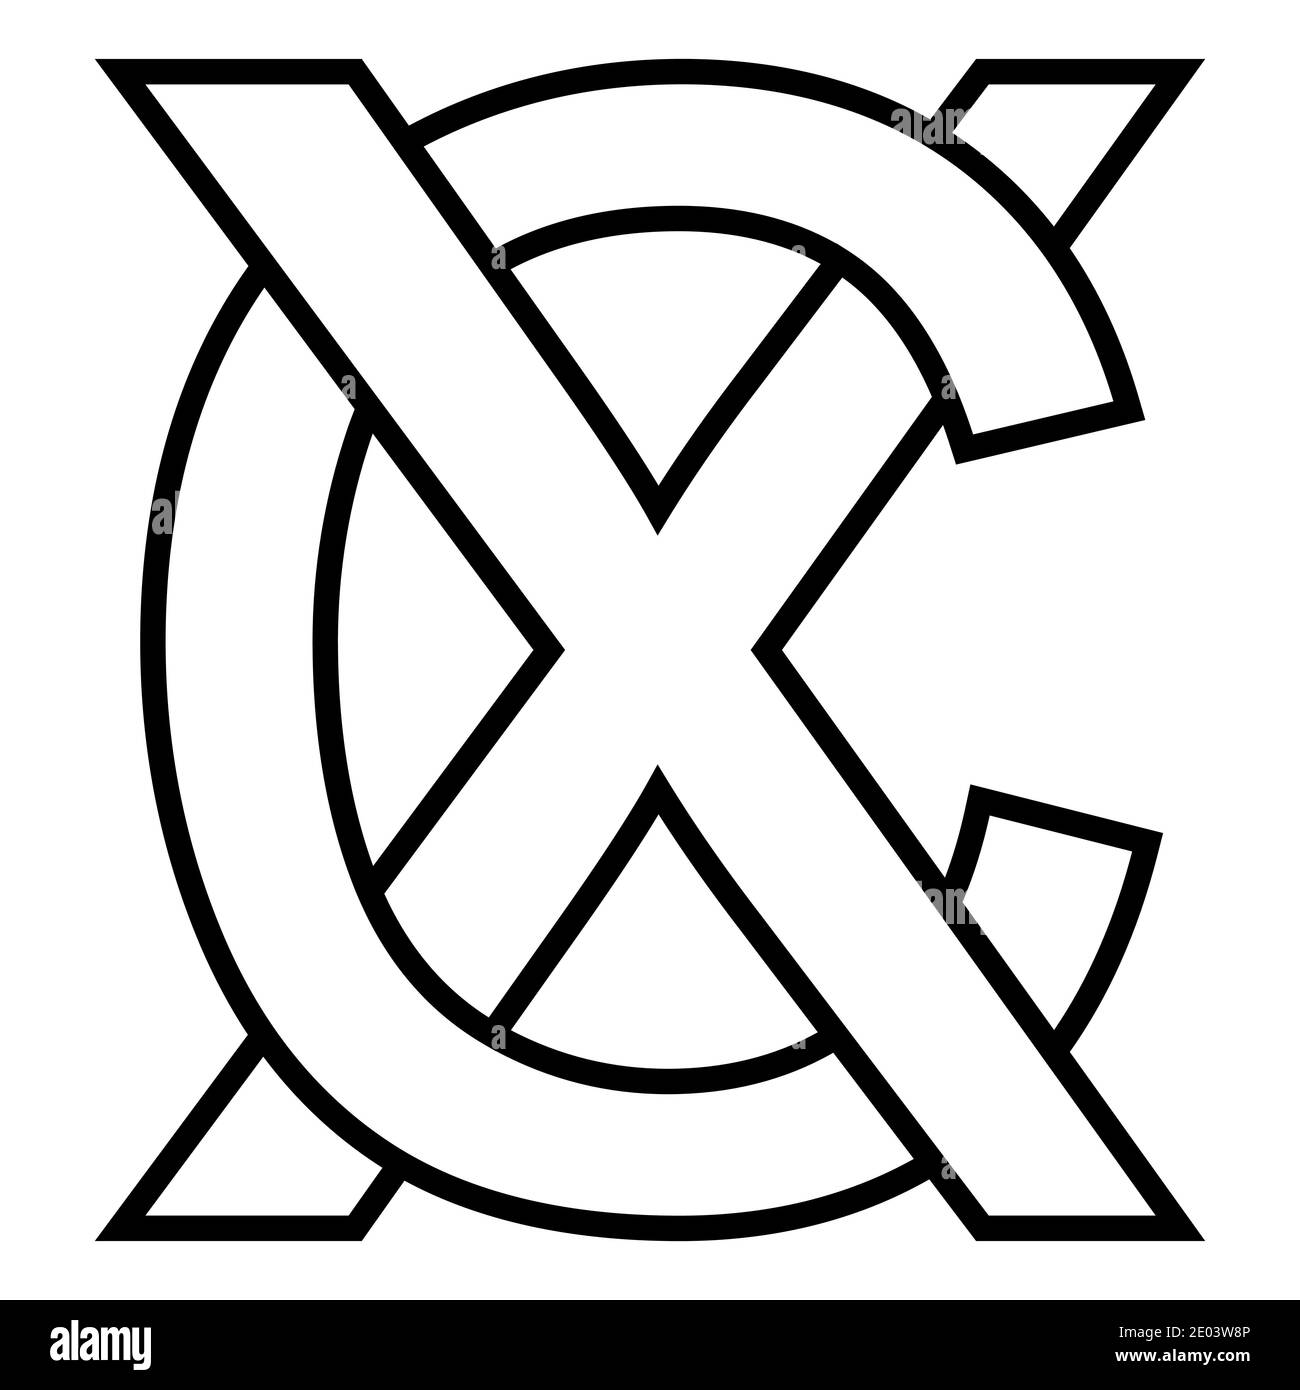 Значок сх. СХ лого. CX логотип компании. Буква x в круге. Лого переплетающиеся люди.